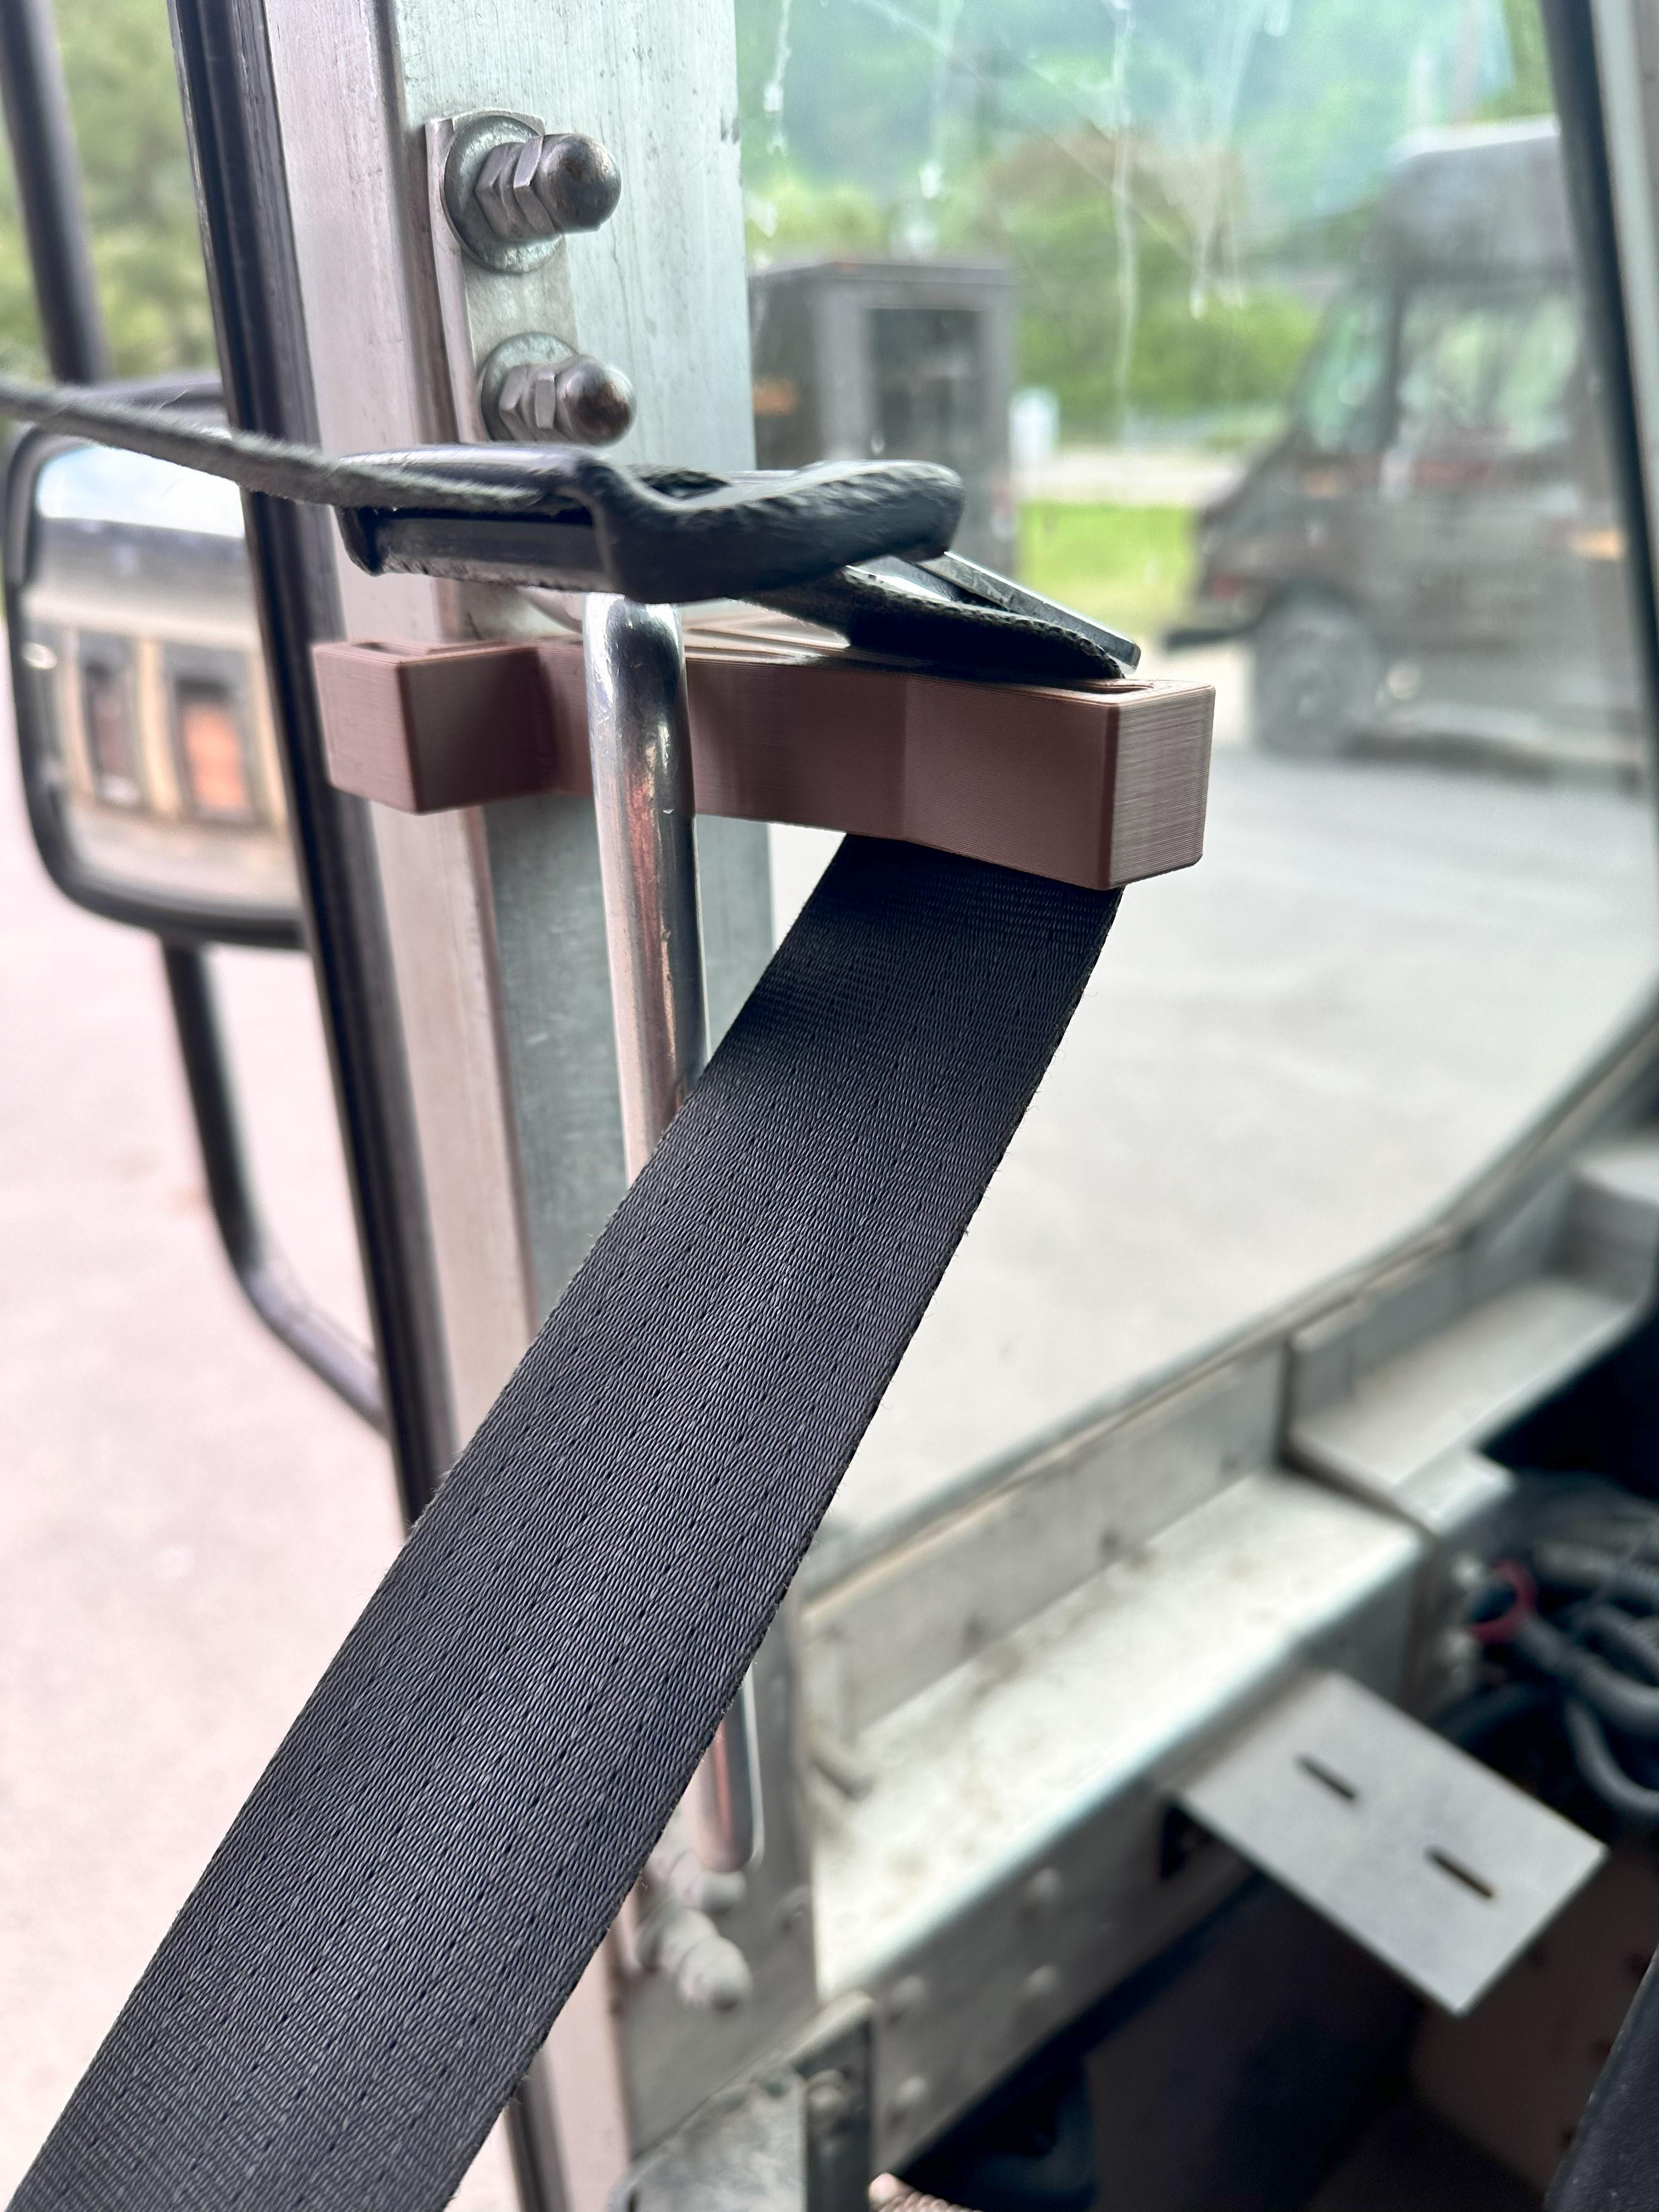  UPS Truck Seatbelt Hook 3d model